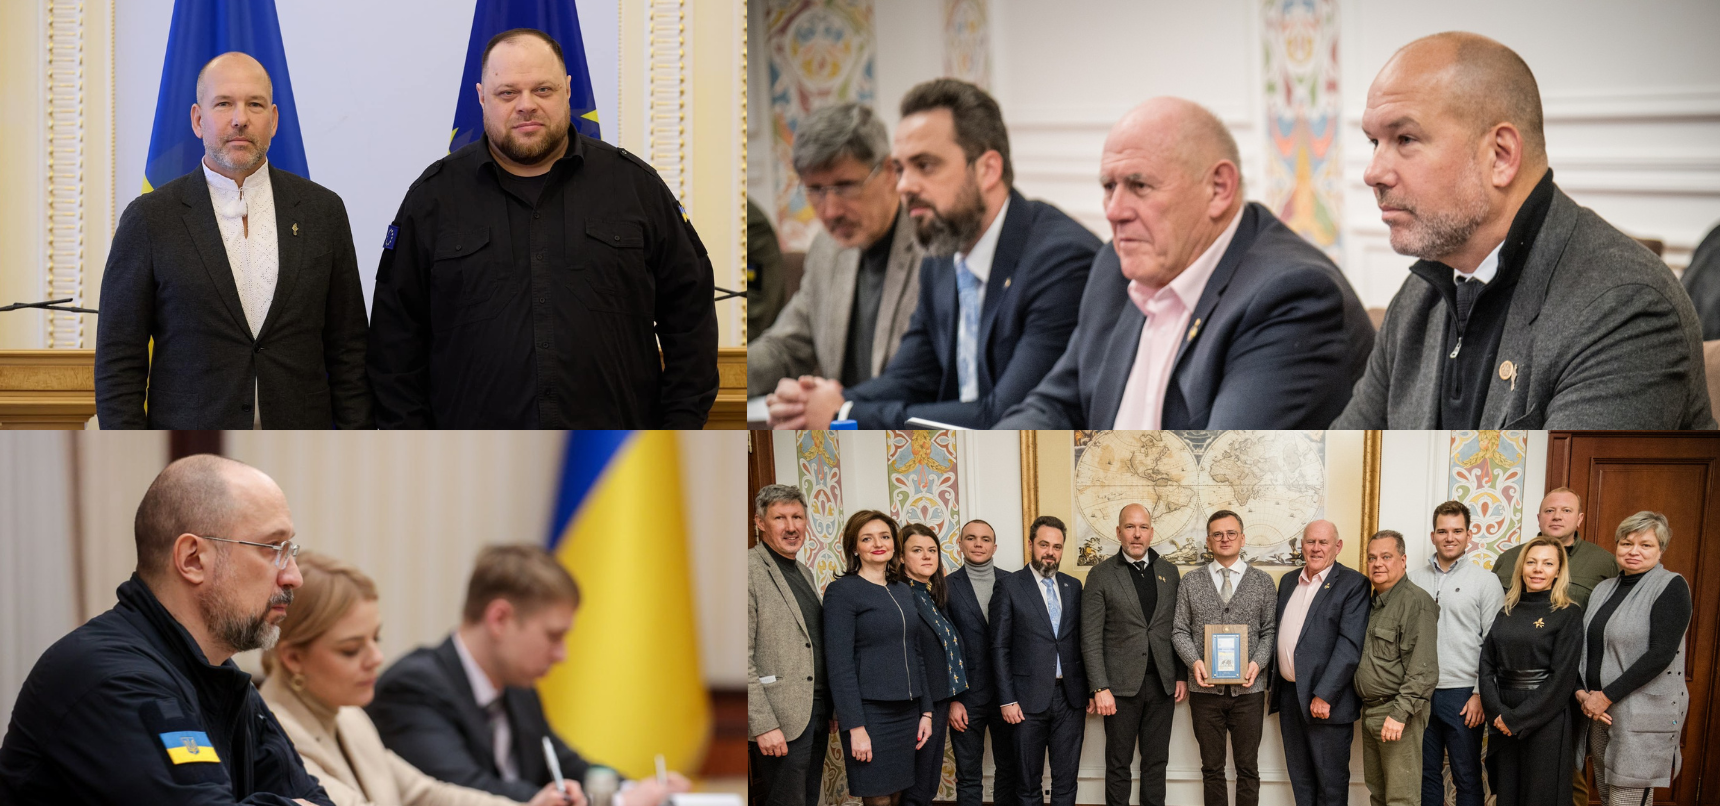 UWC leadership meets with Ukraine’s political leaders